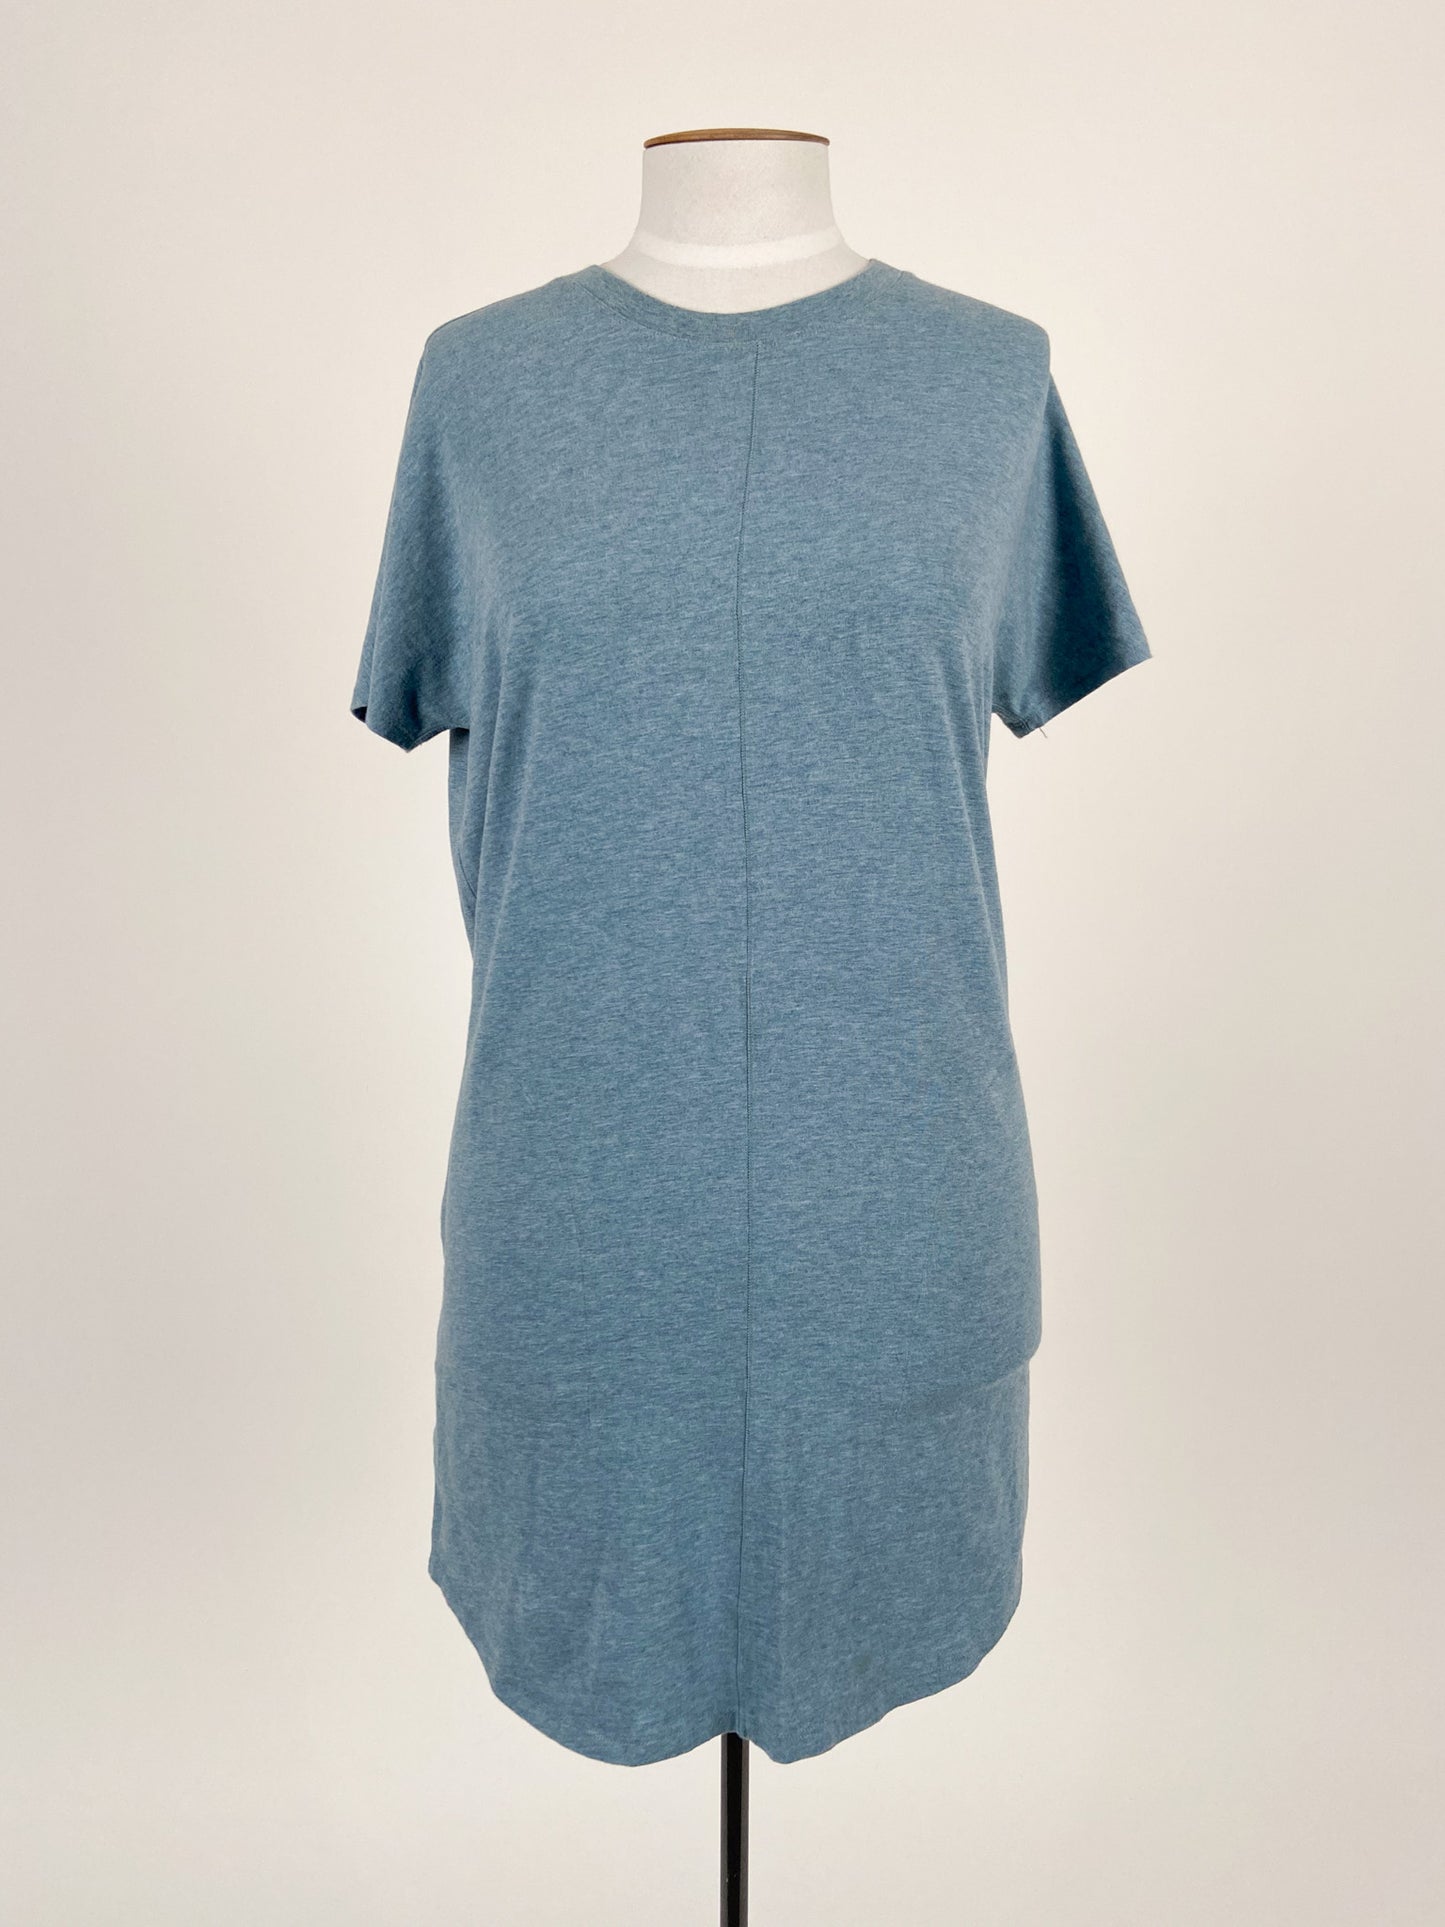 Unknown Brand | Blue Casual/Workwear Dress | Size L